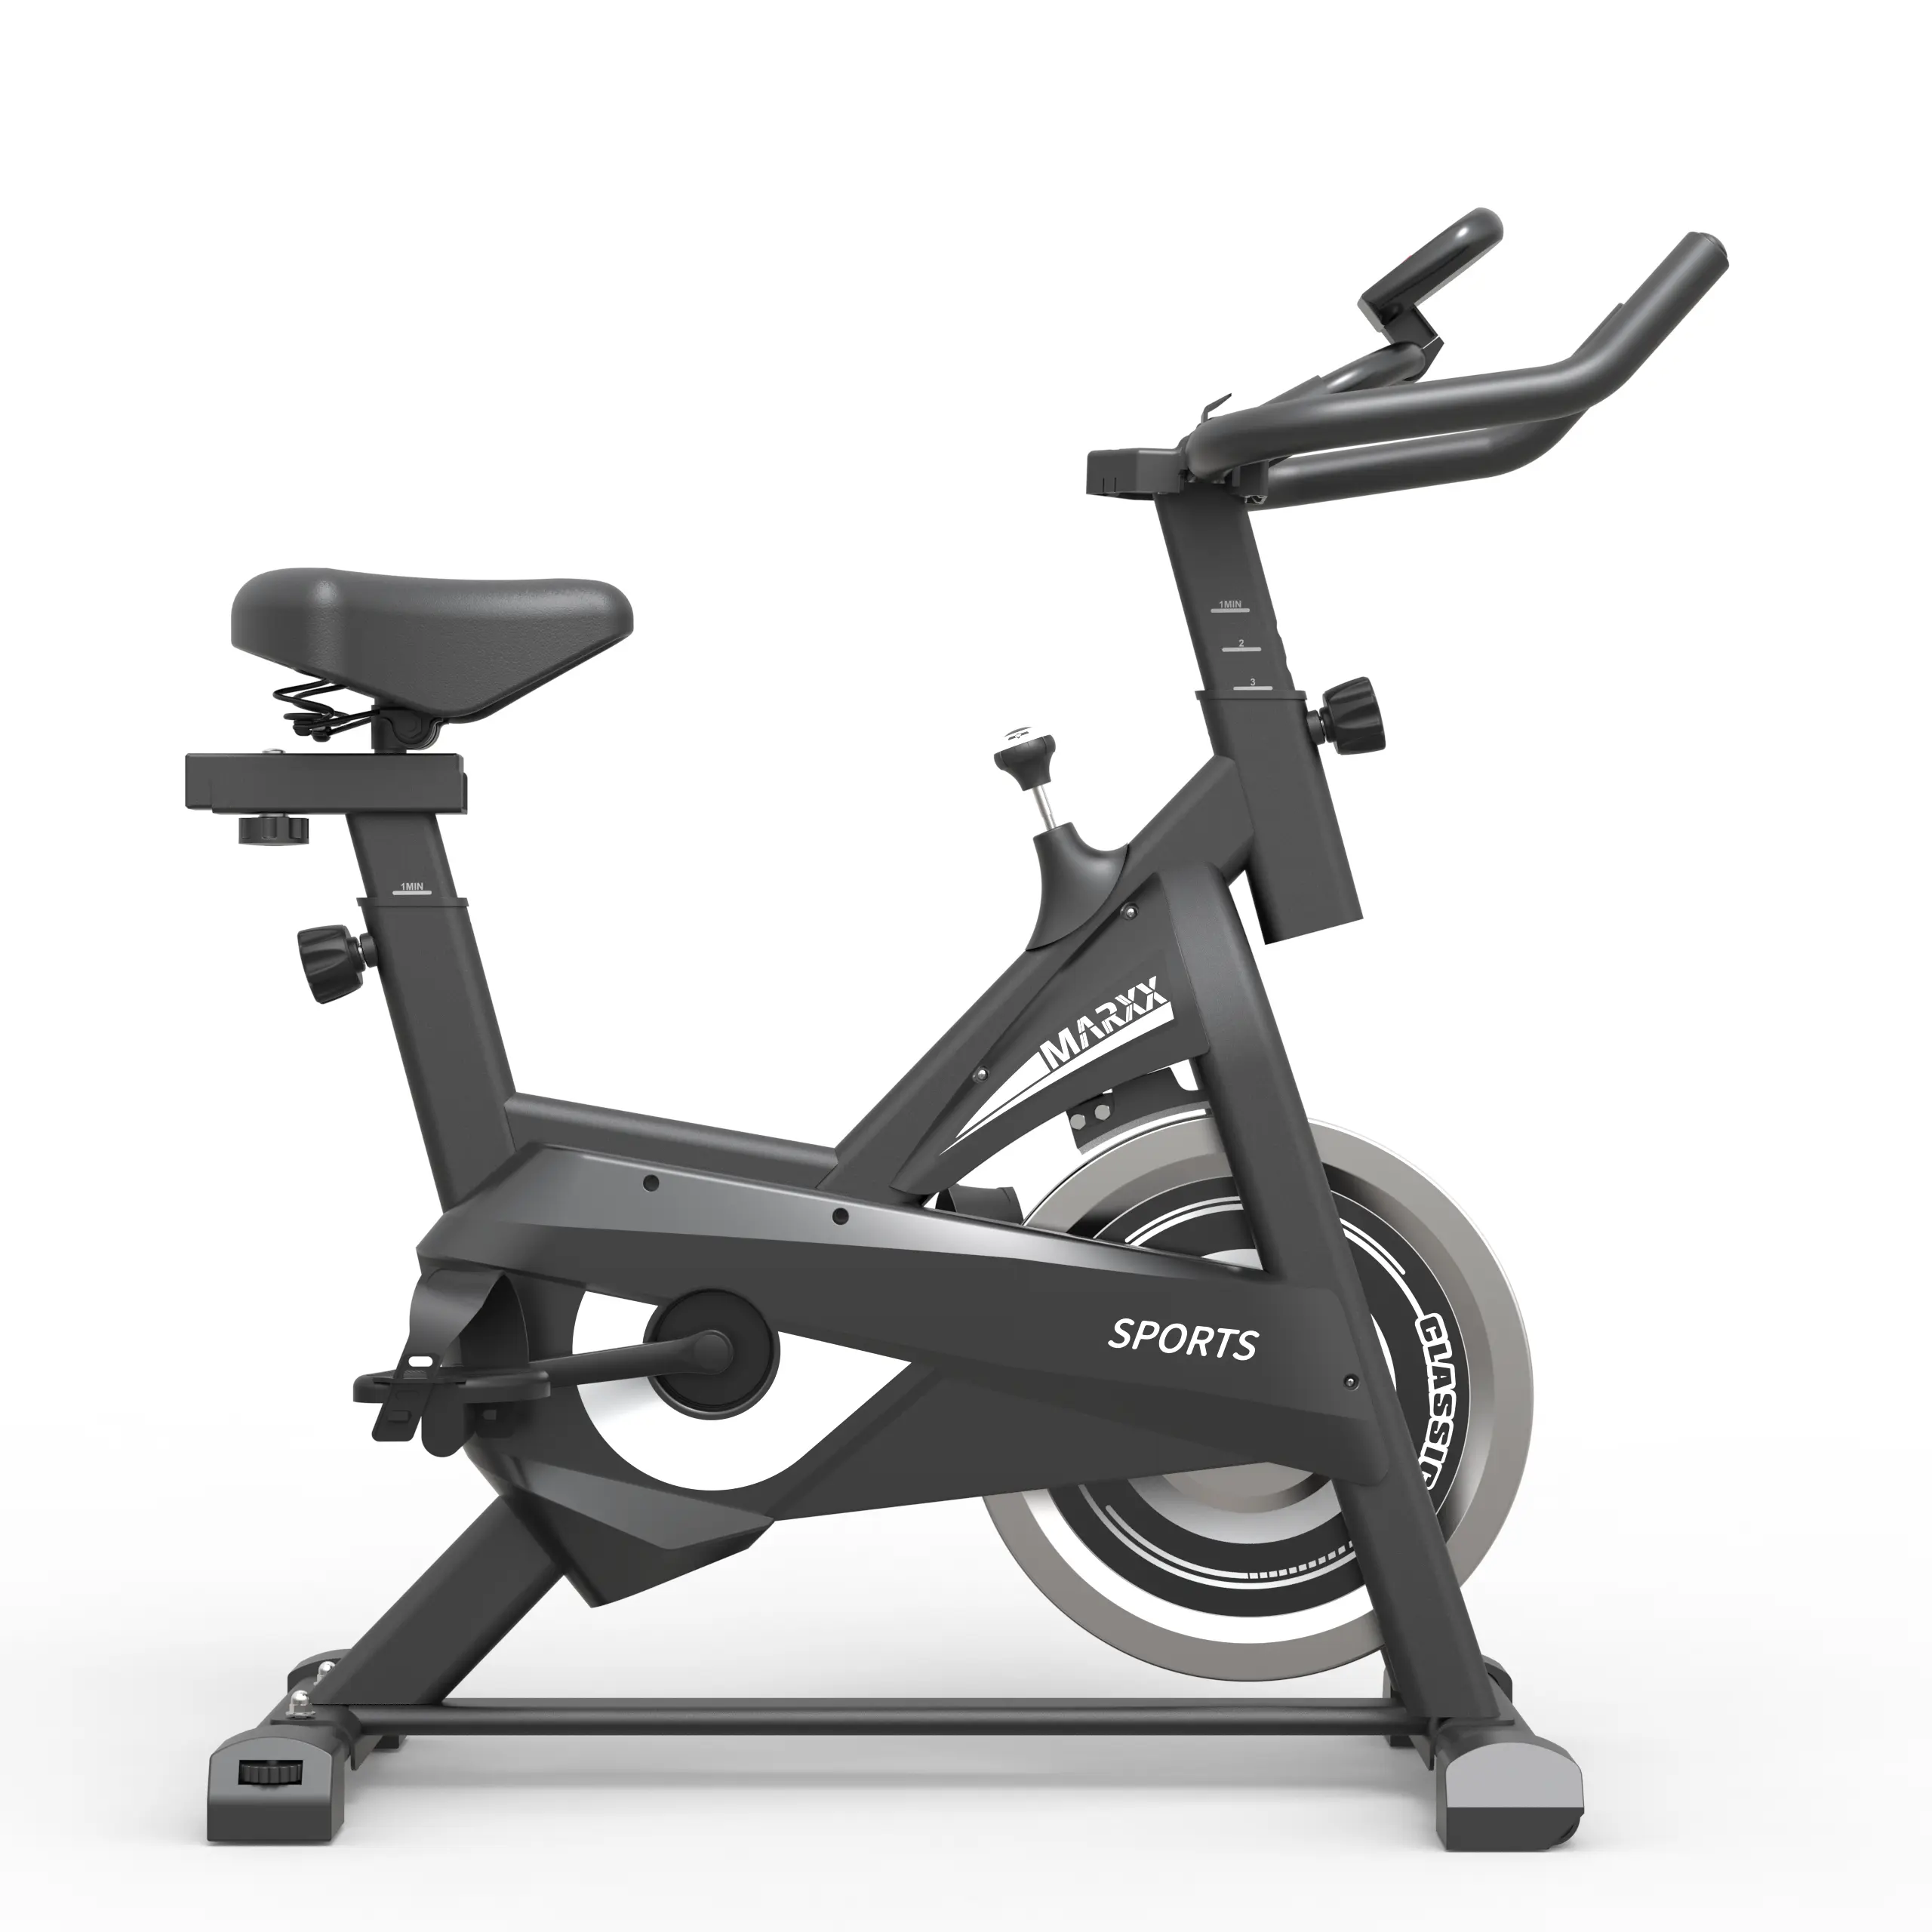 Fuente-Equipo de Fitness inteligente Unisex, máquina de Spinning para pérdida de peso, de fábrica